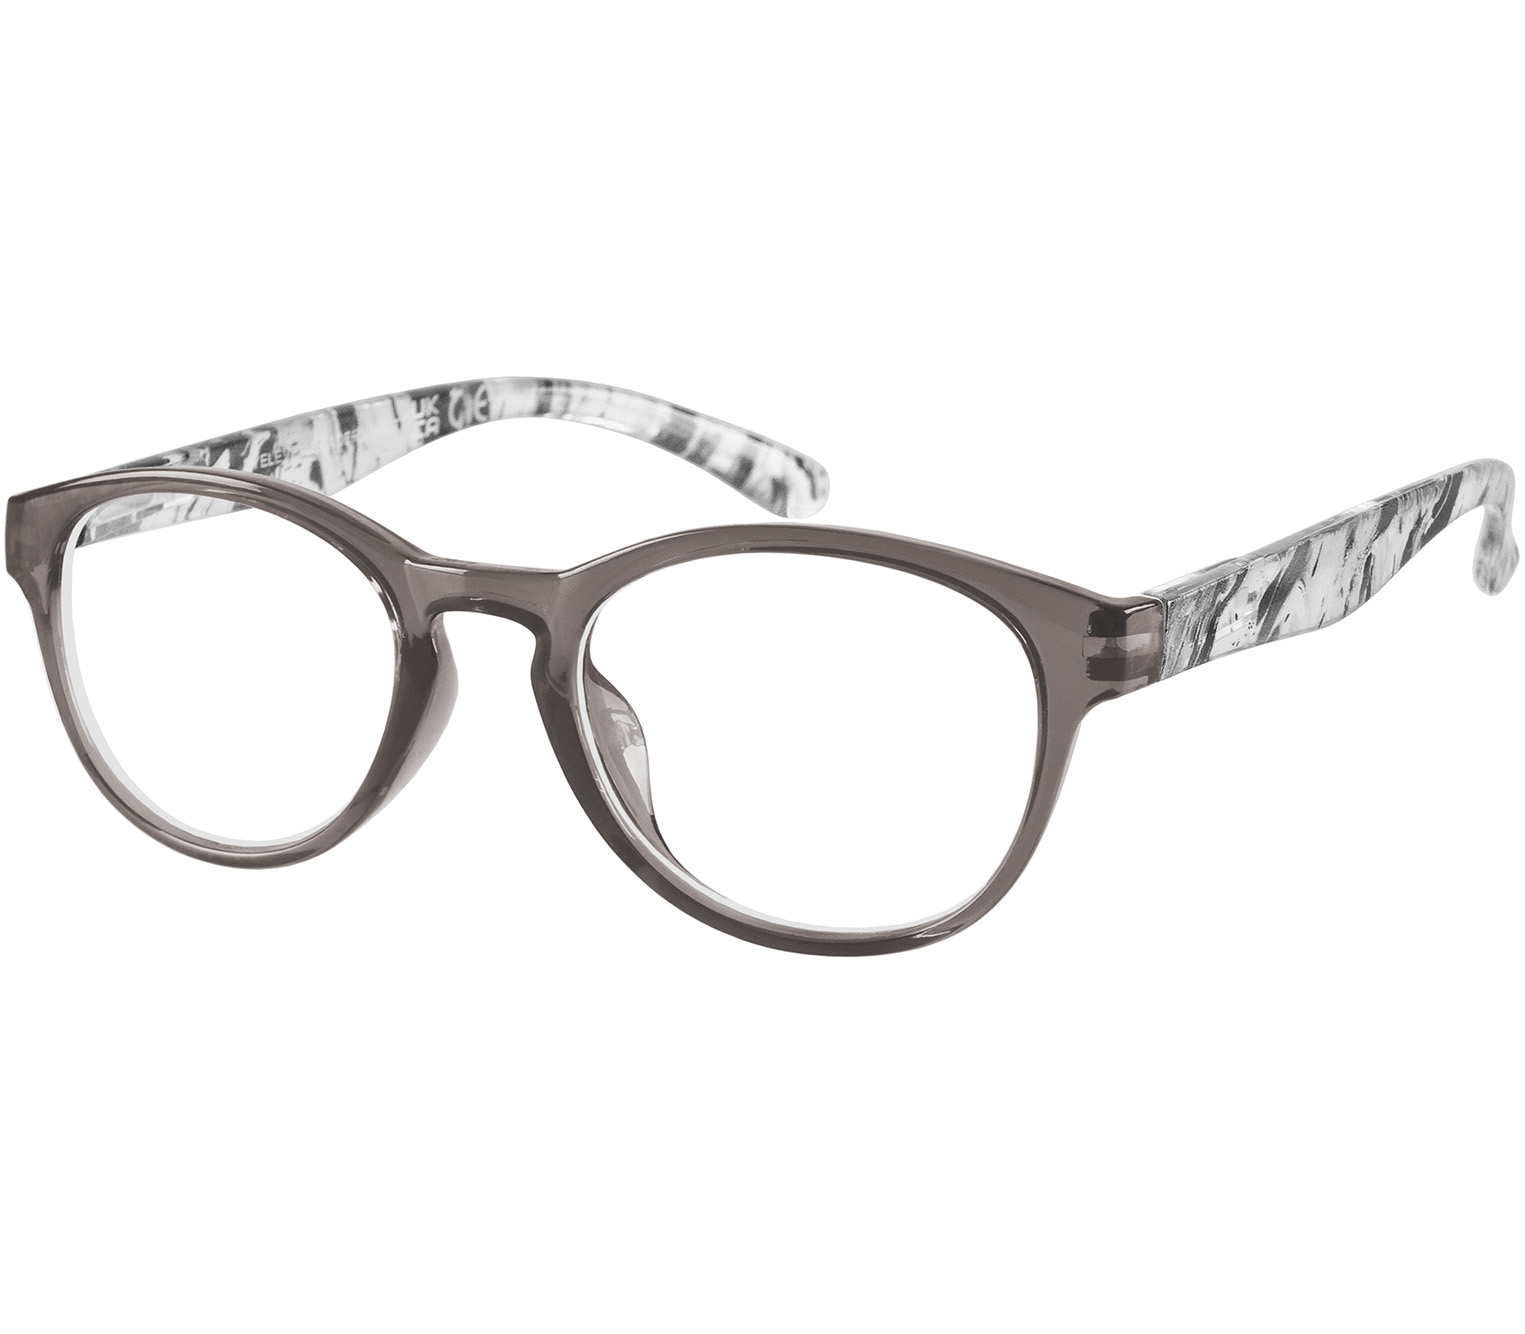 Main Image (Angle) - Studio (Grey) Retro Reading Glasses